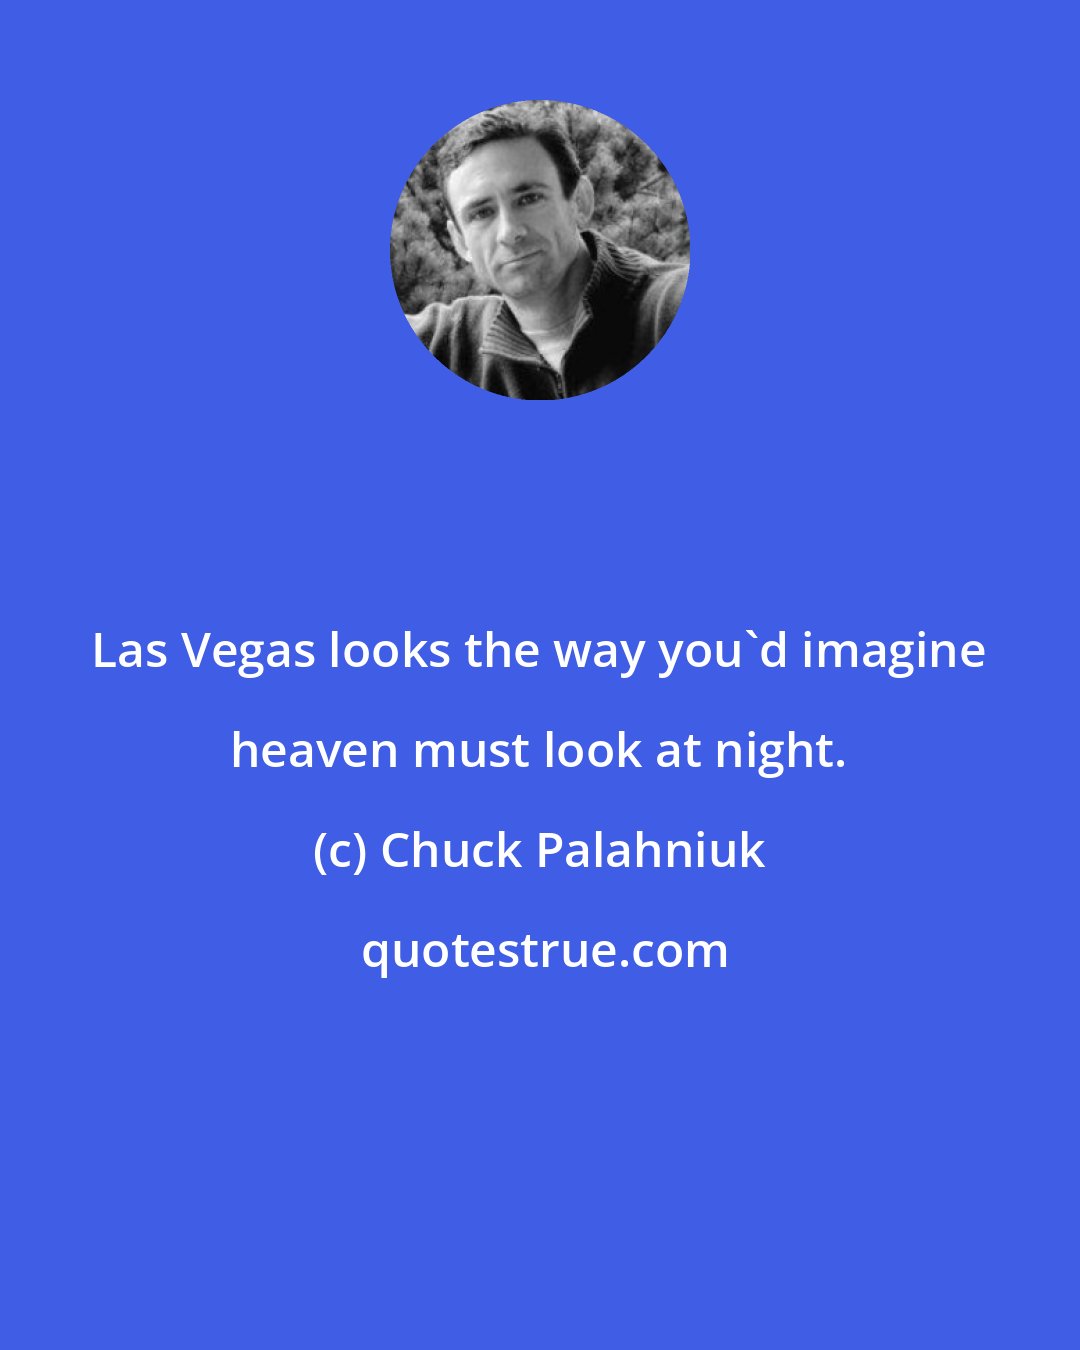 Chuck Palahniuk: Las Vegas looks the way you'd imagine heaven must look at night.